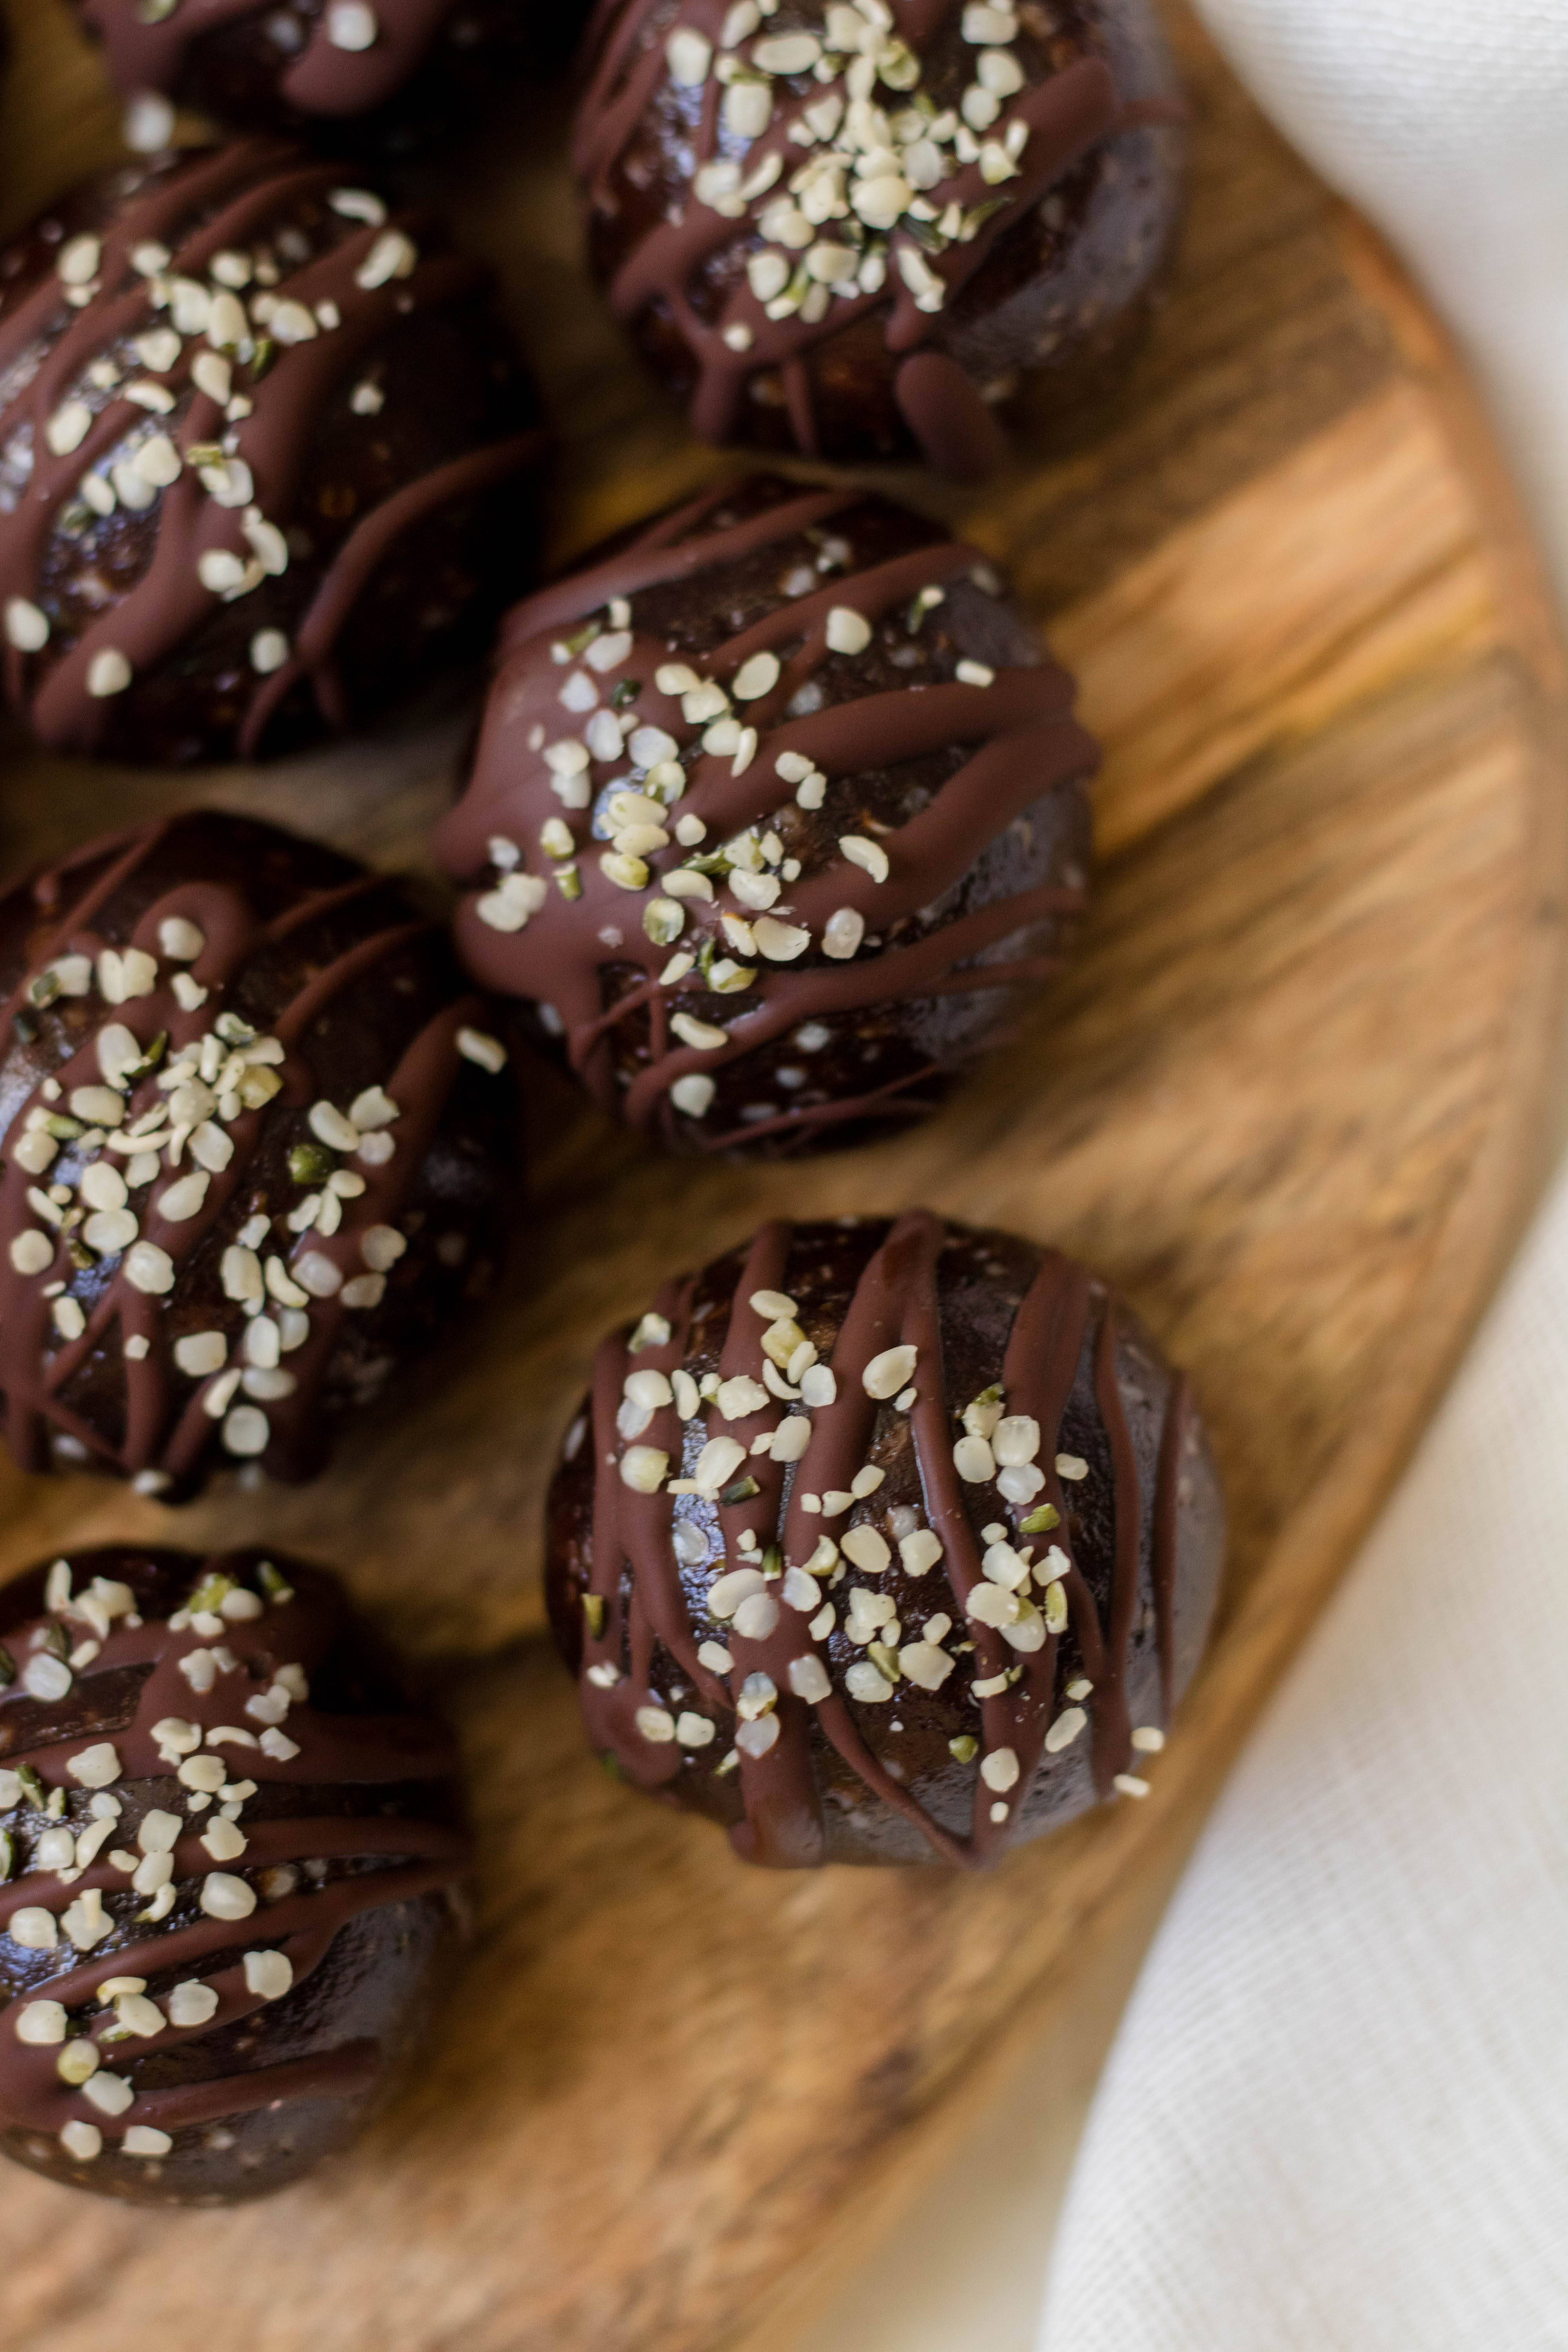 The best hemp seed chocolate bliss balls